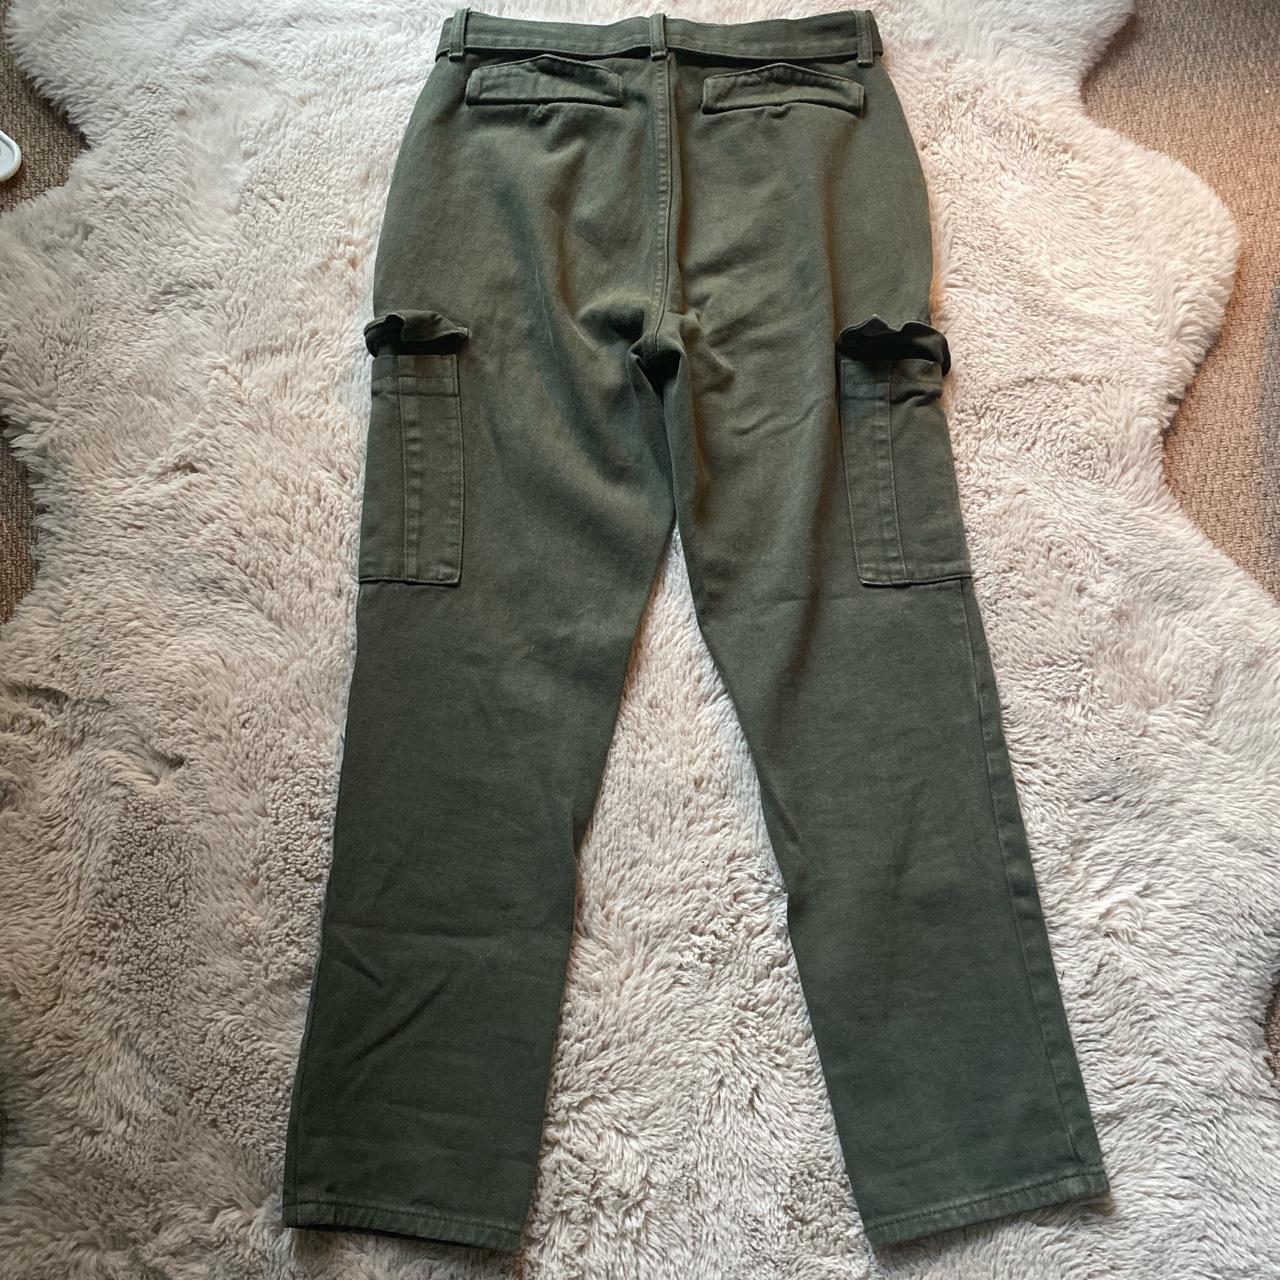 Pacsun green cargo jeans size 26 belt can be... - Depop